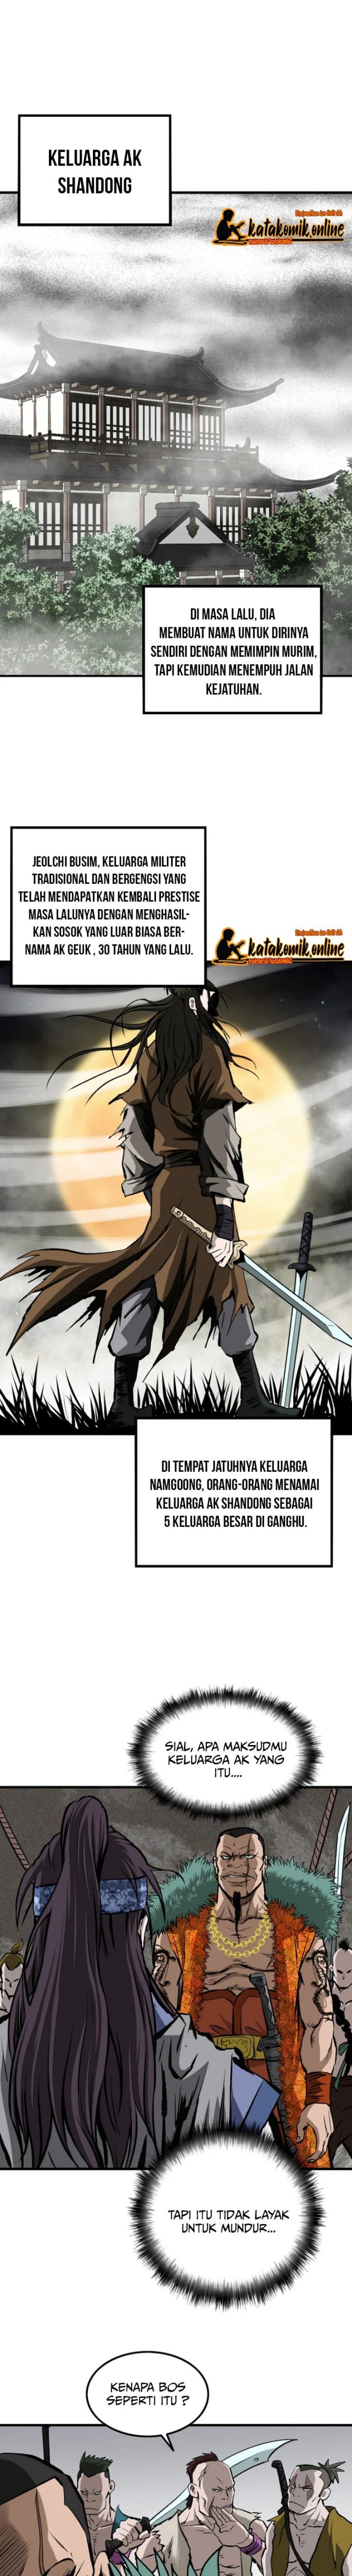 Archer Sword God : Descendants Of The Archer Chapter 03 - 149